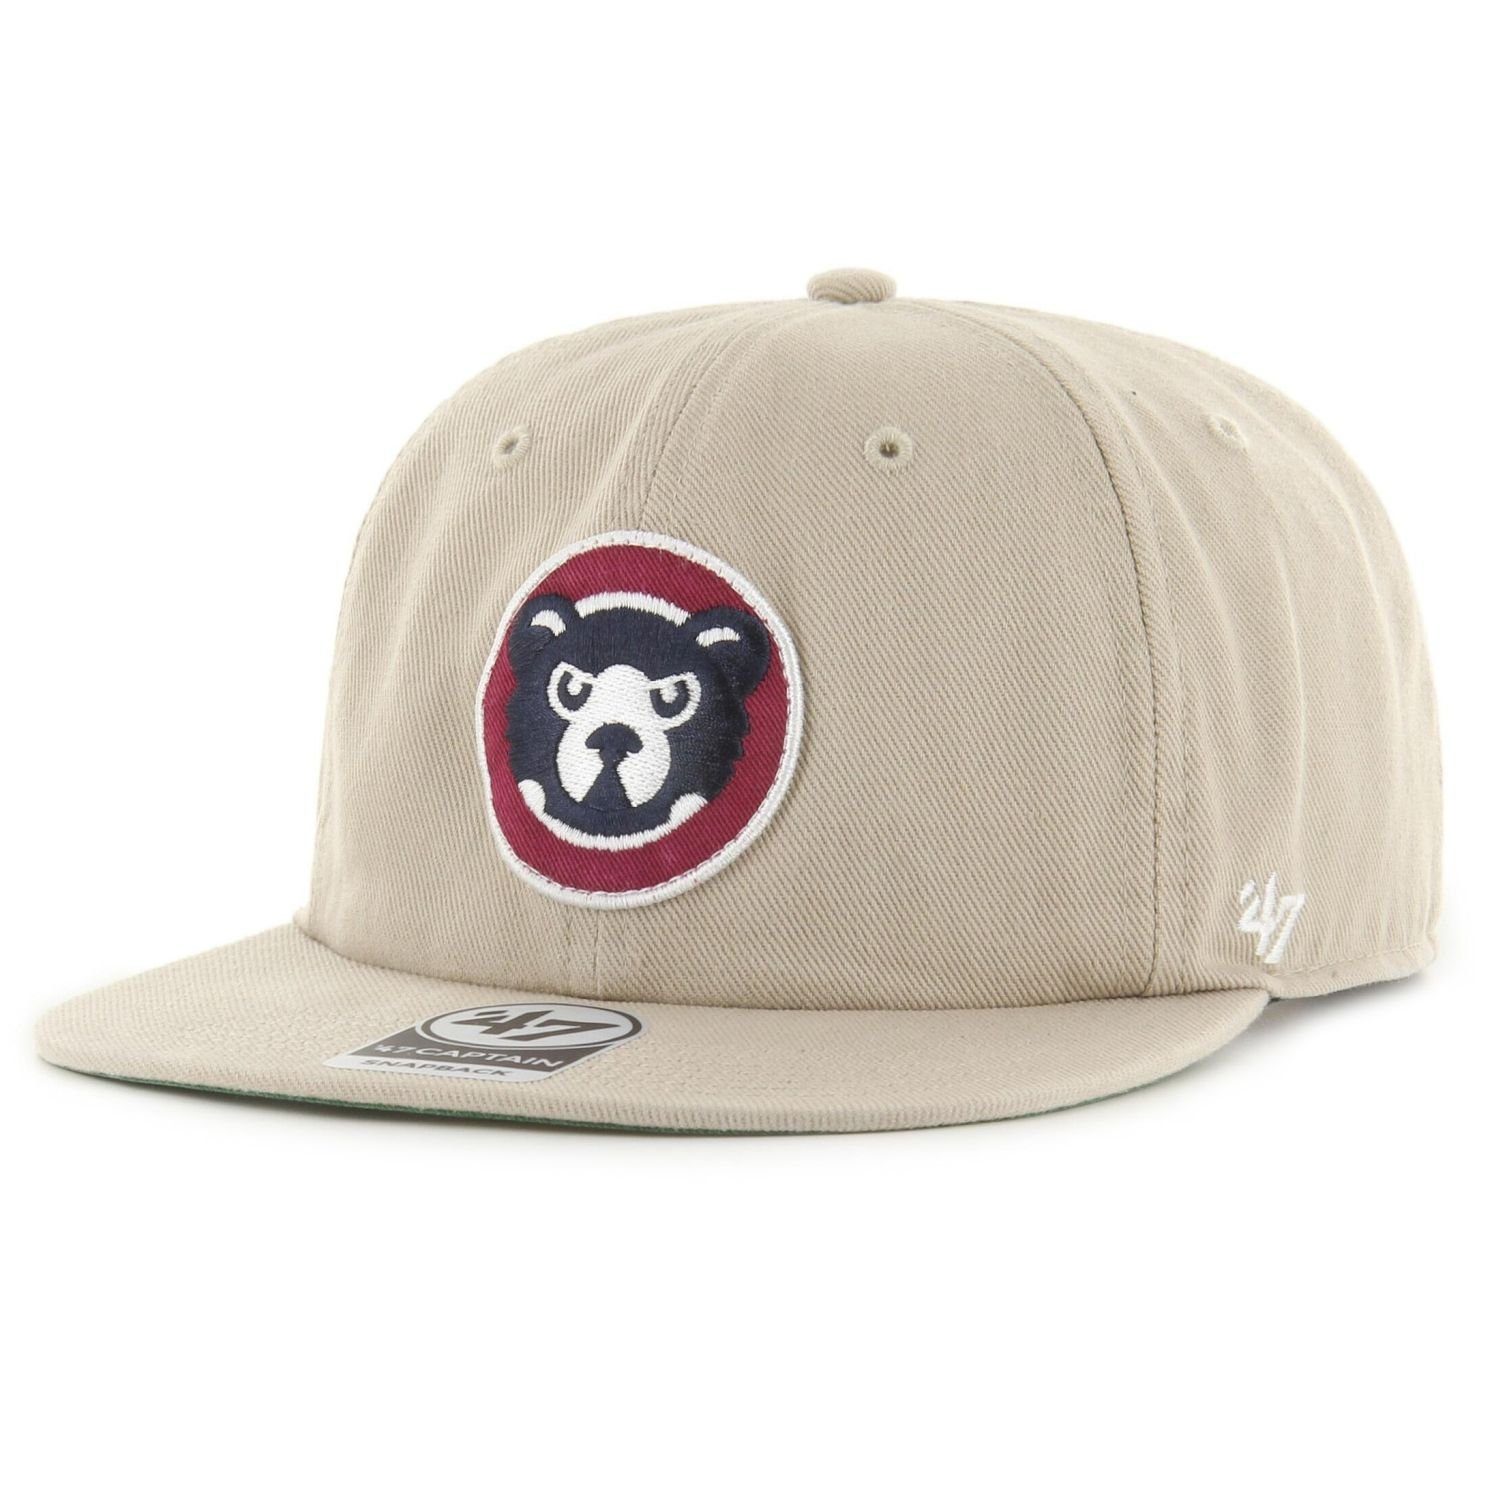 '47 Brand Snapback Cap COOPERSTOWN WAYBACK Chicago Cubs